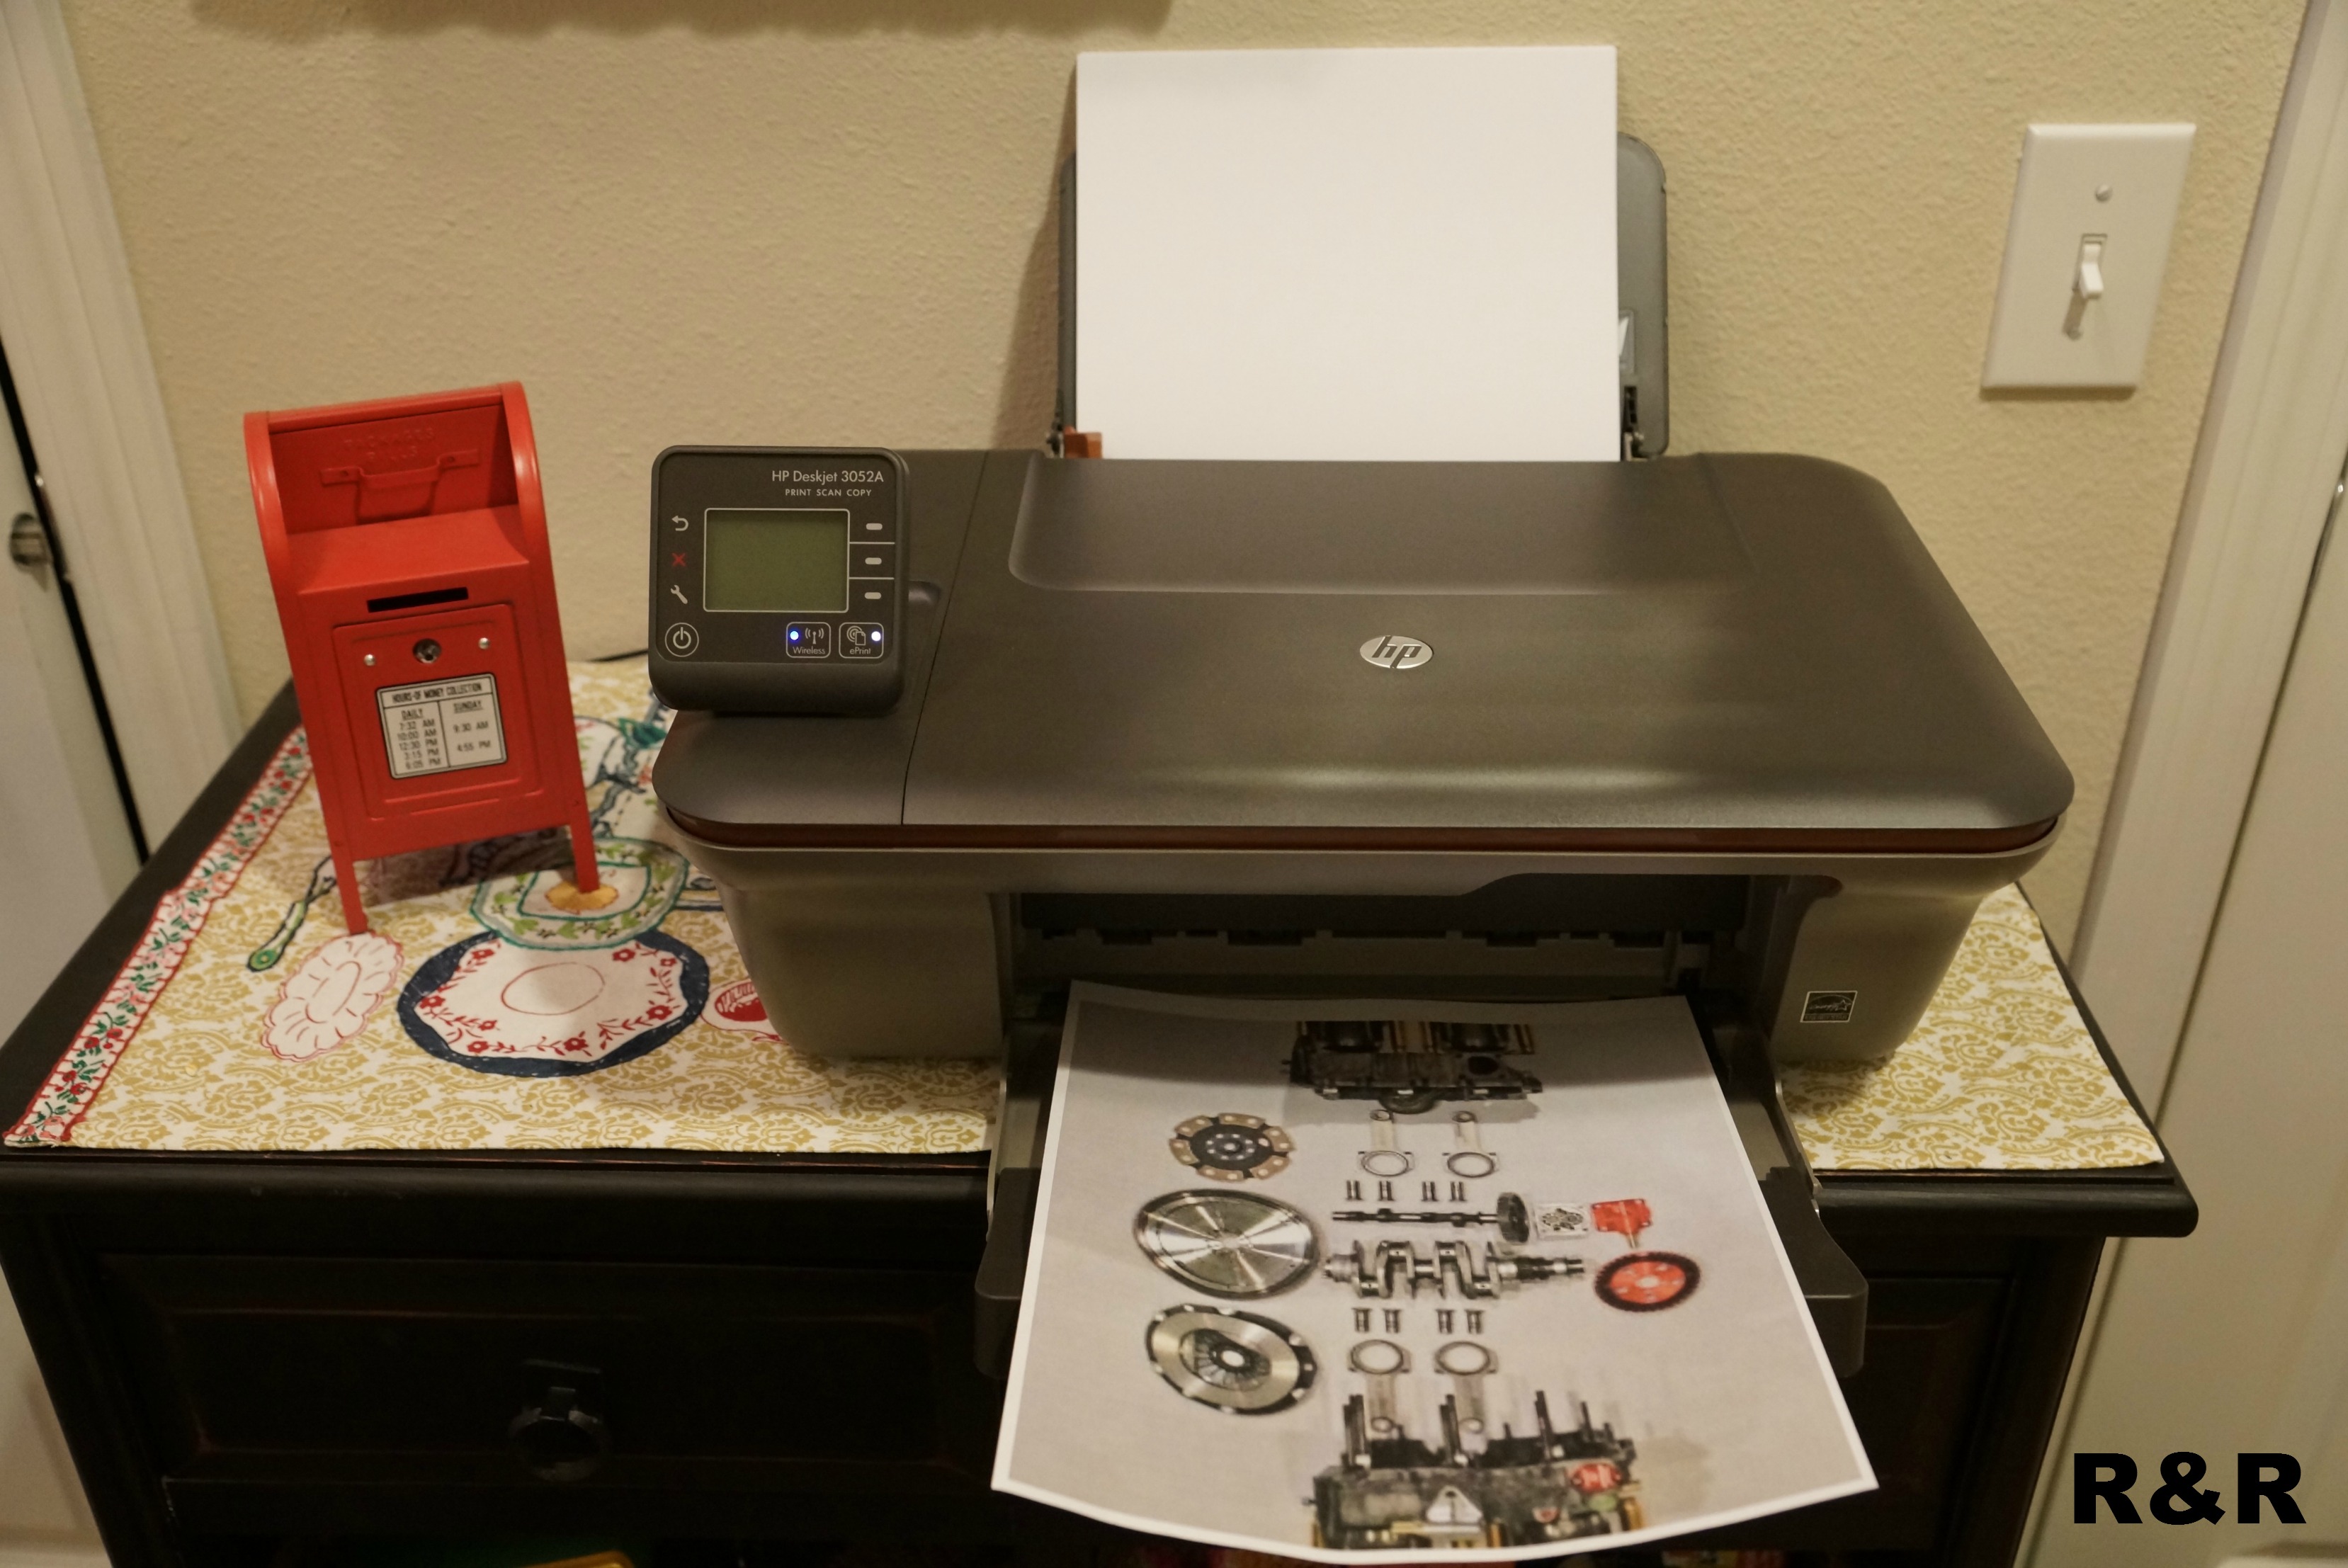 eprint printers for ipad